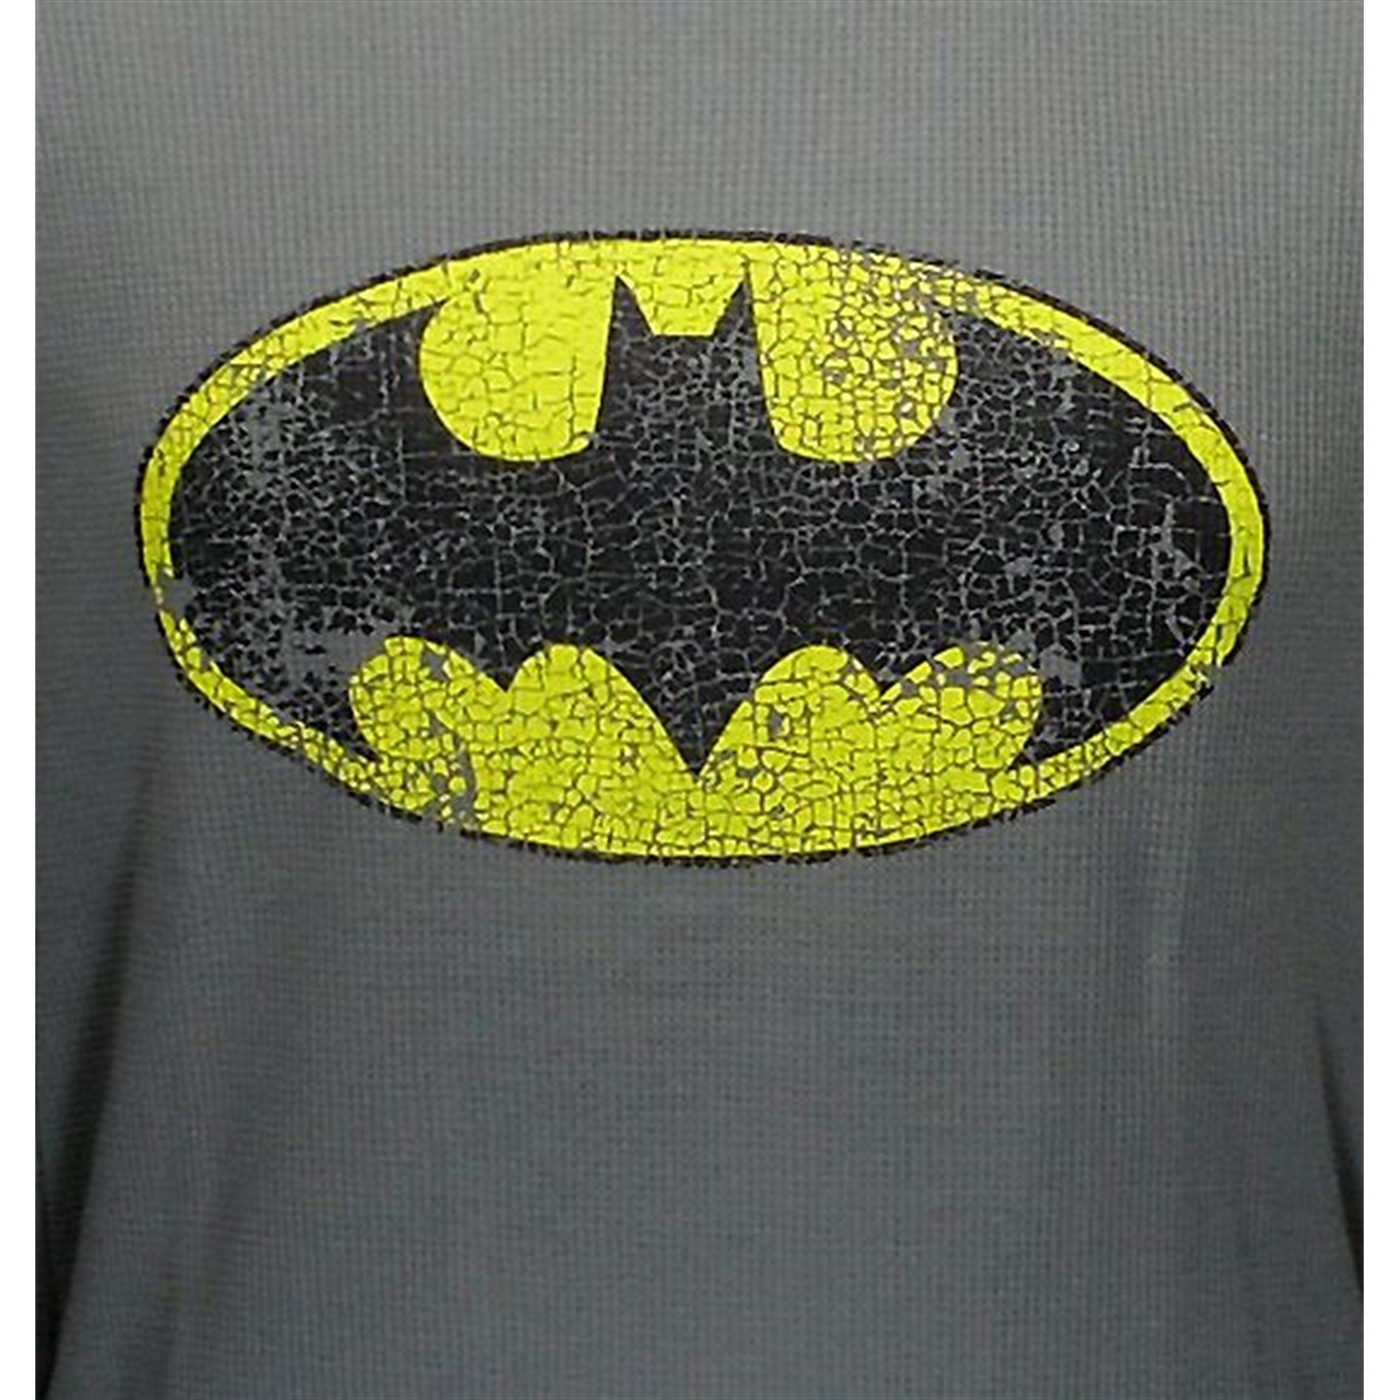 Batman Thermal Long Sleeve Sleep Top